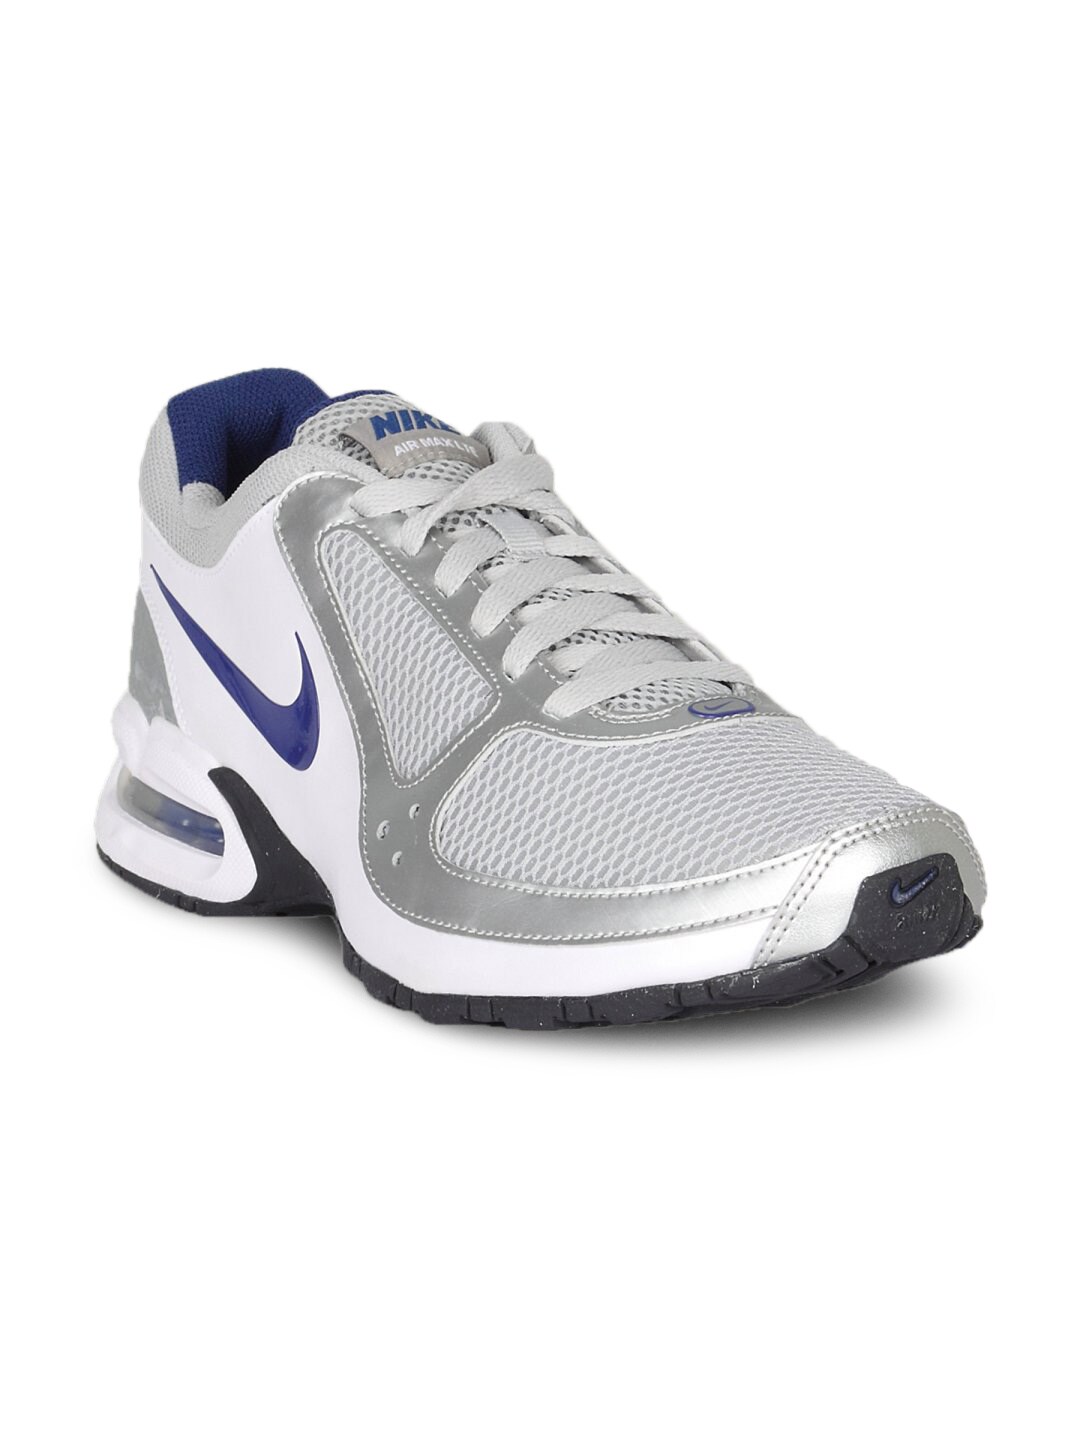 Nike Men's Air Max Lte White Blue Shoe